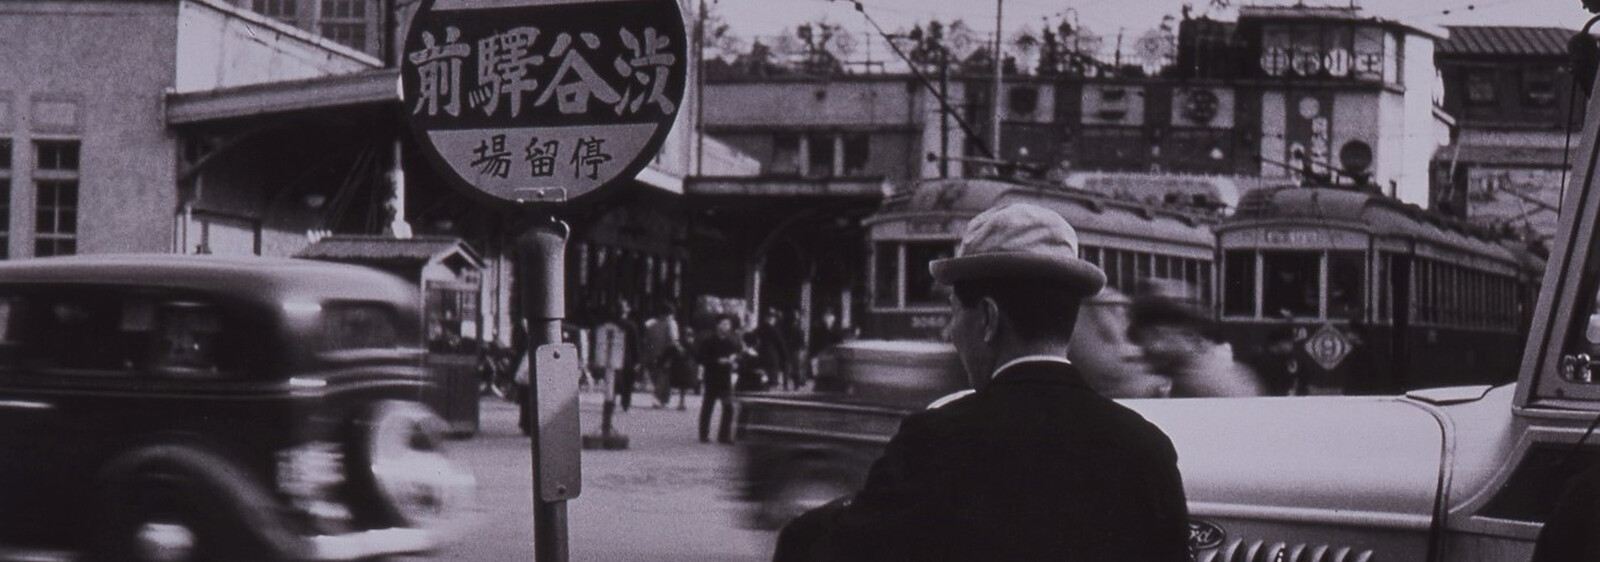 Kuwabara Kineo, <span class="italic">Front of Shibuya Station</span> (from “Dream Town”) (1936)